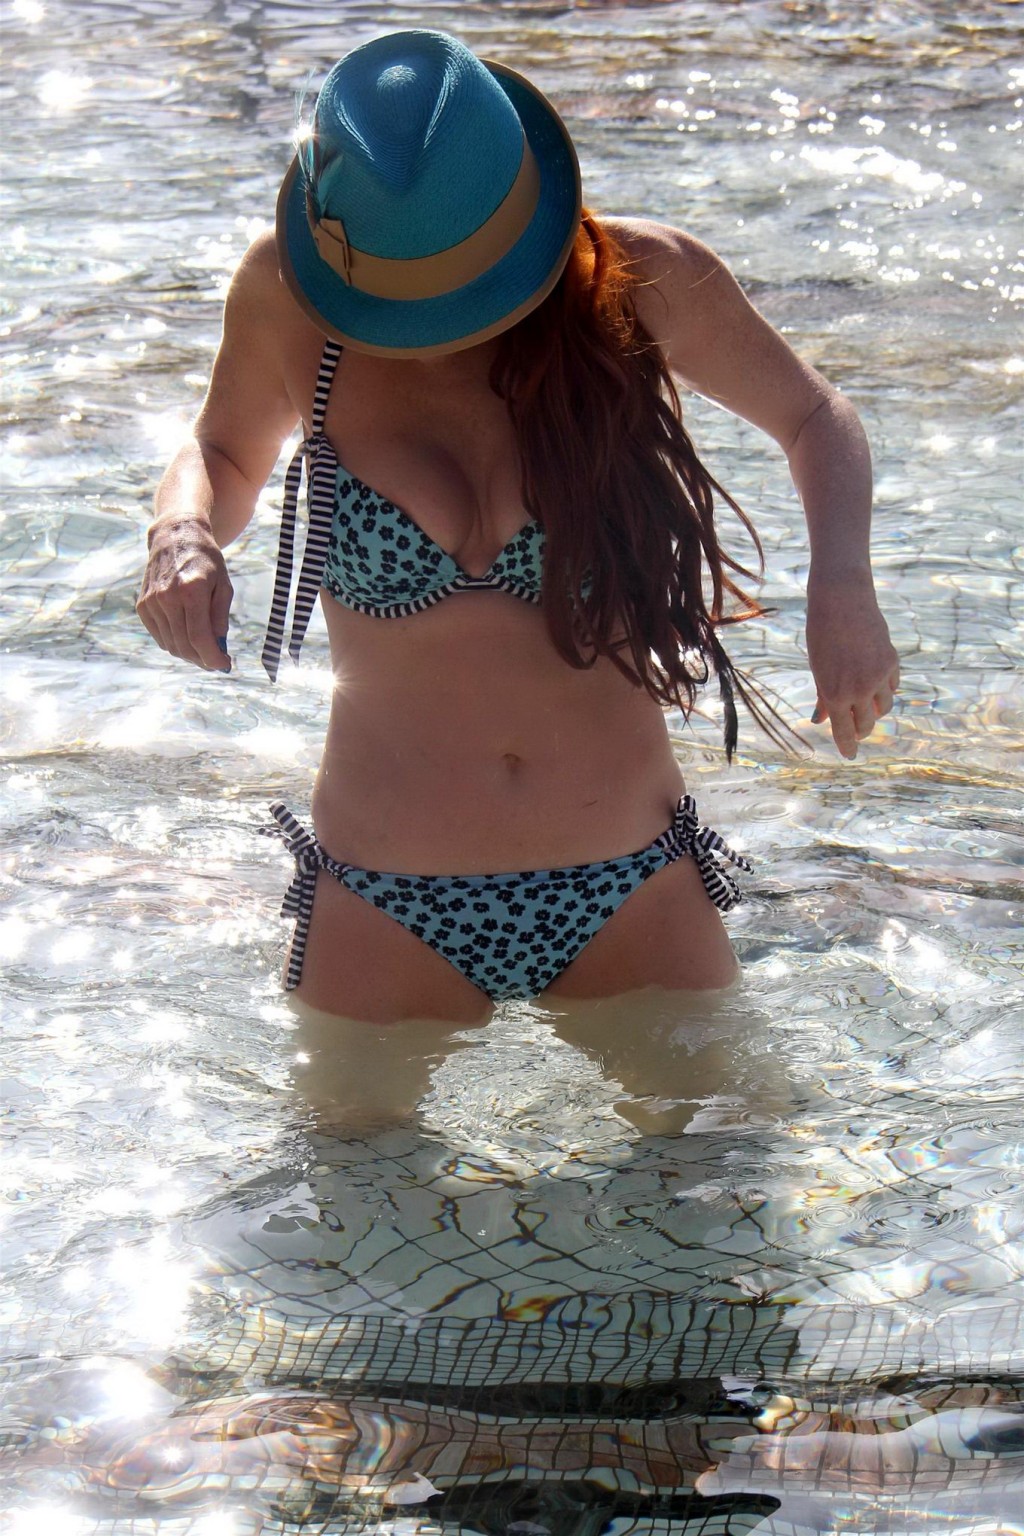 Phoebe price bikini nip slip at the venetian hotel pool in las vegas
 #75267221